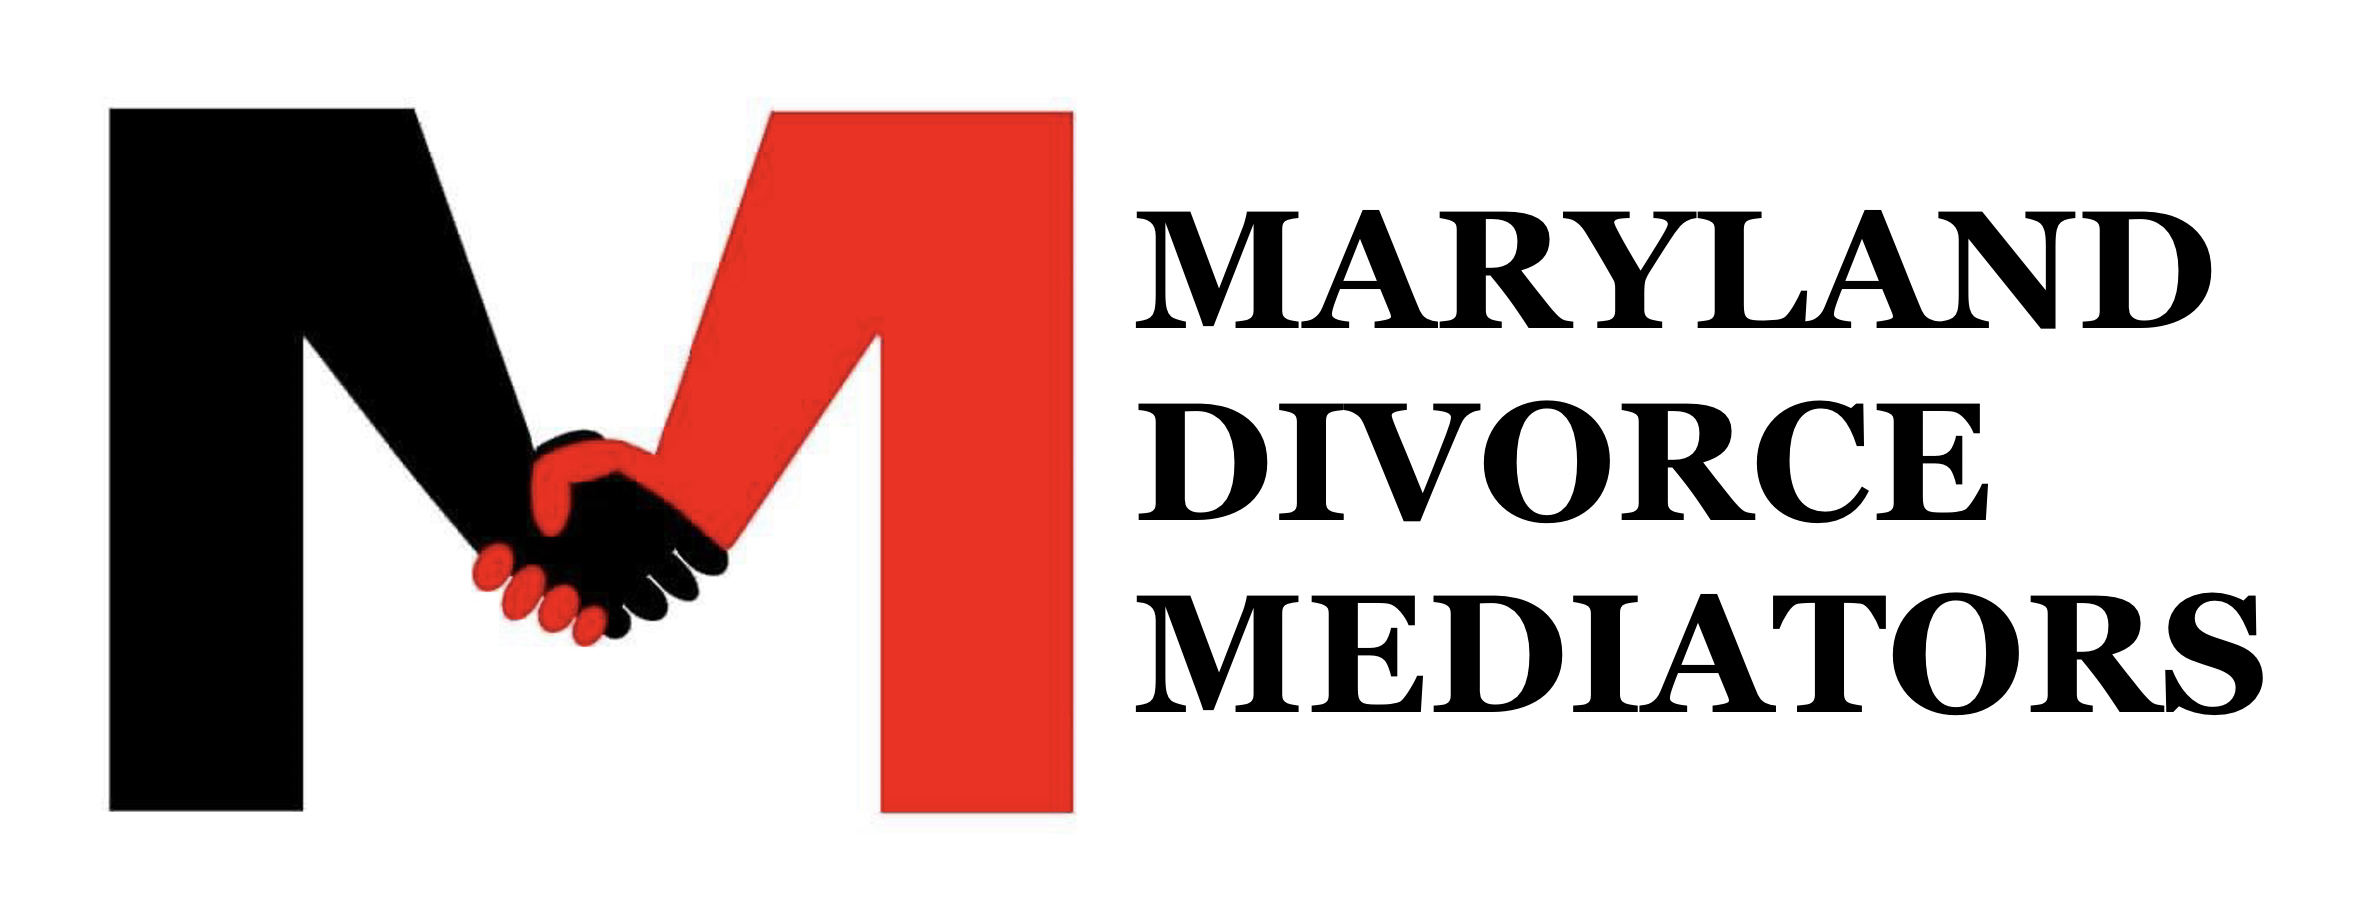 Maryland Divorce Mediators